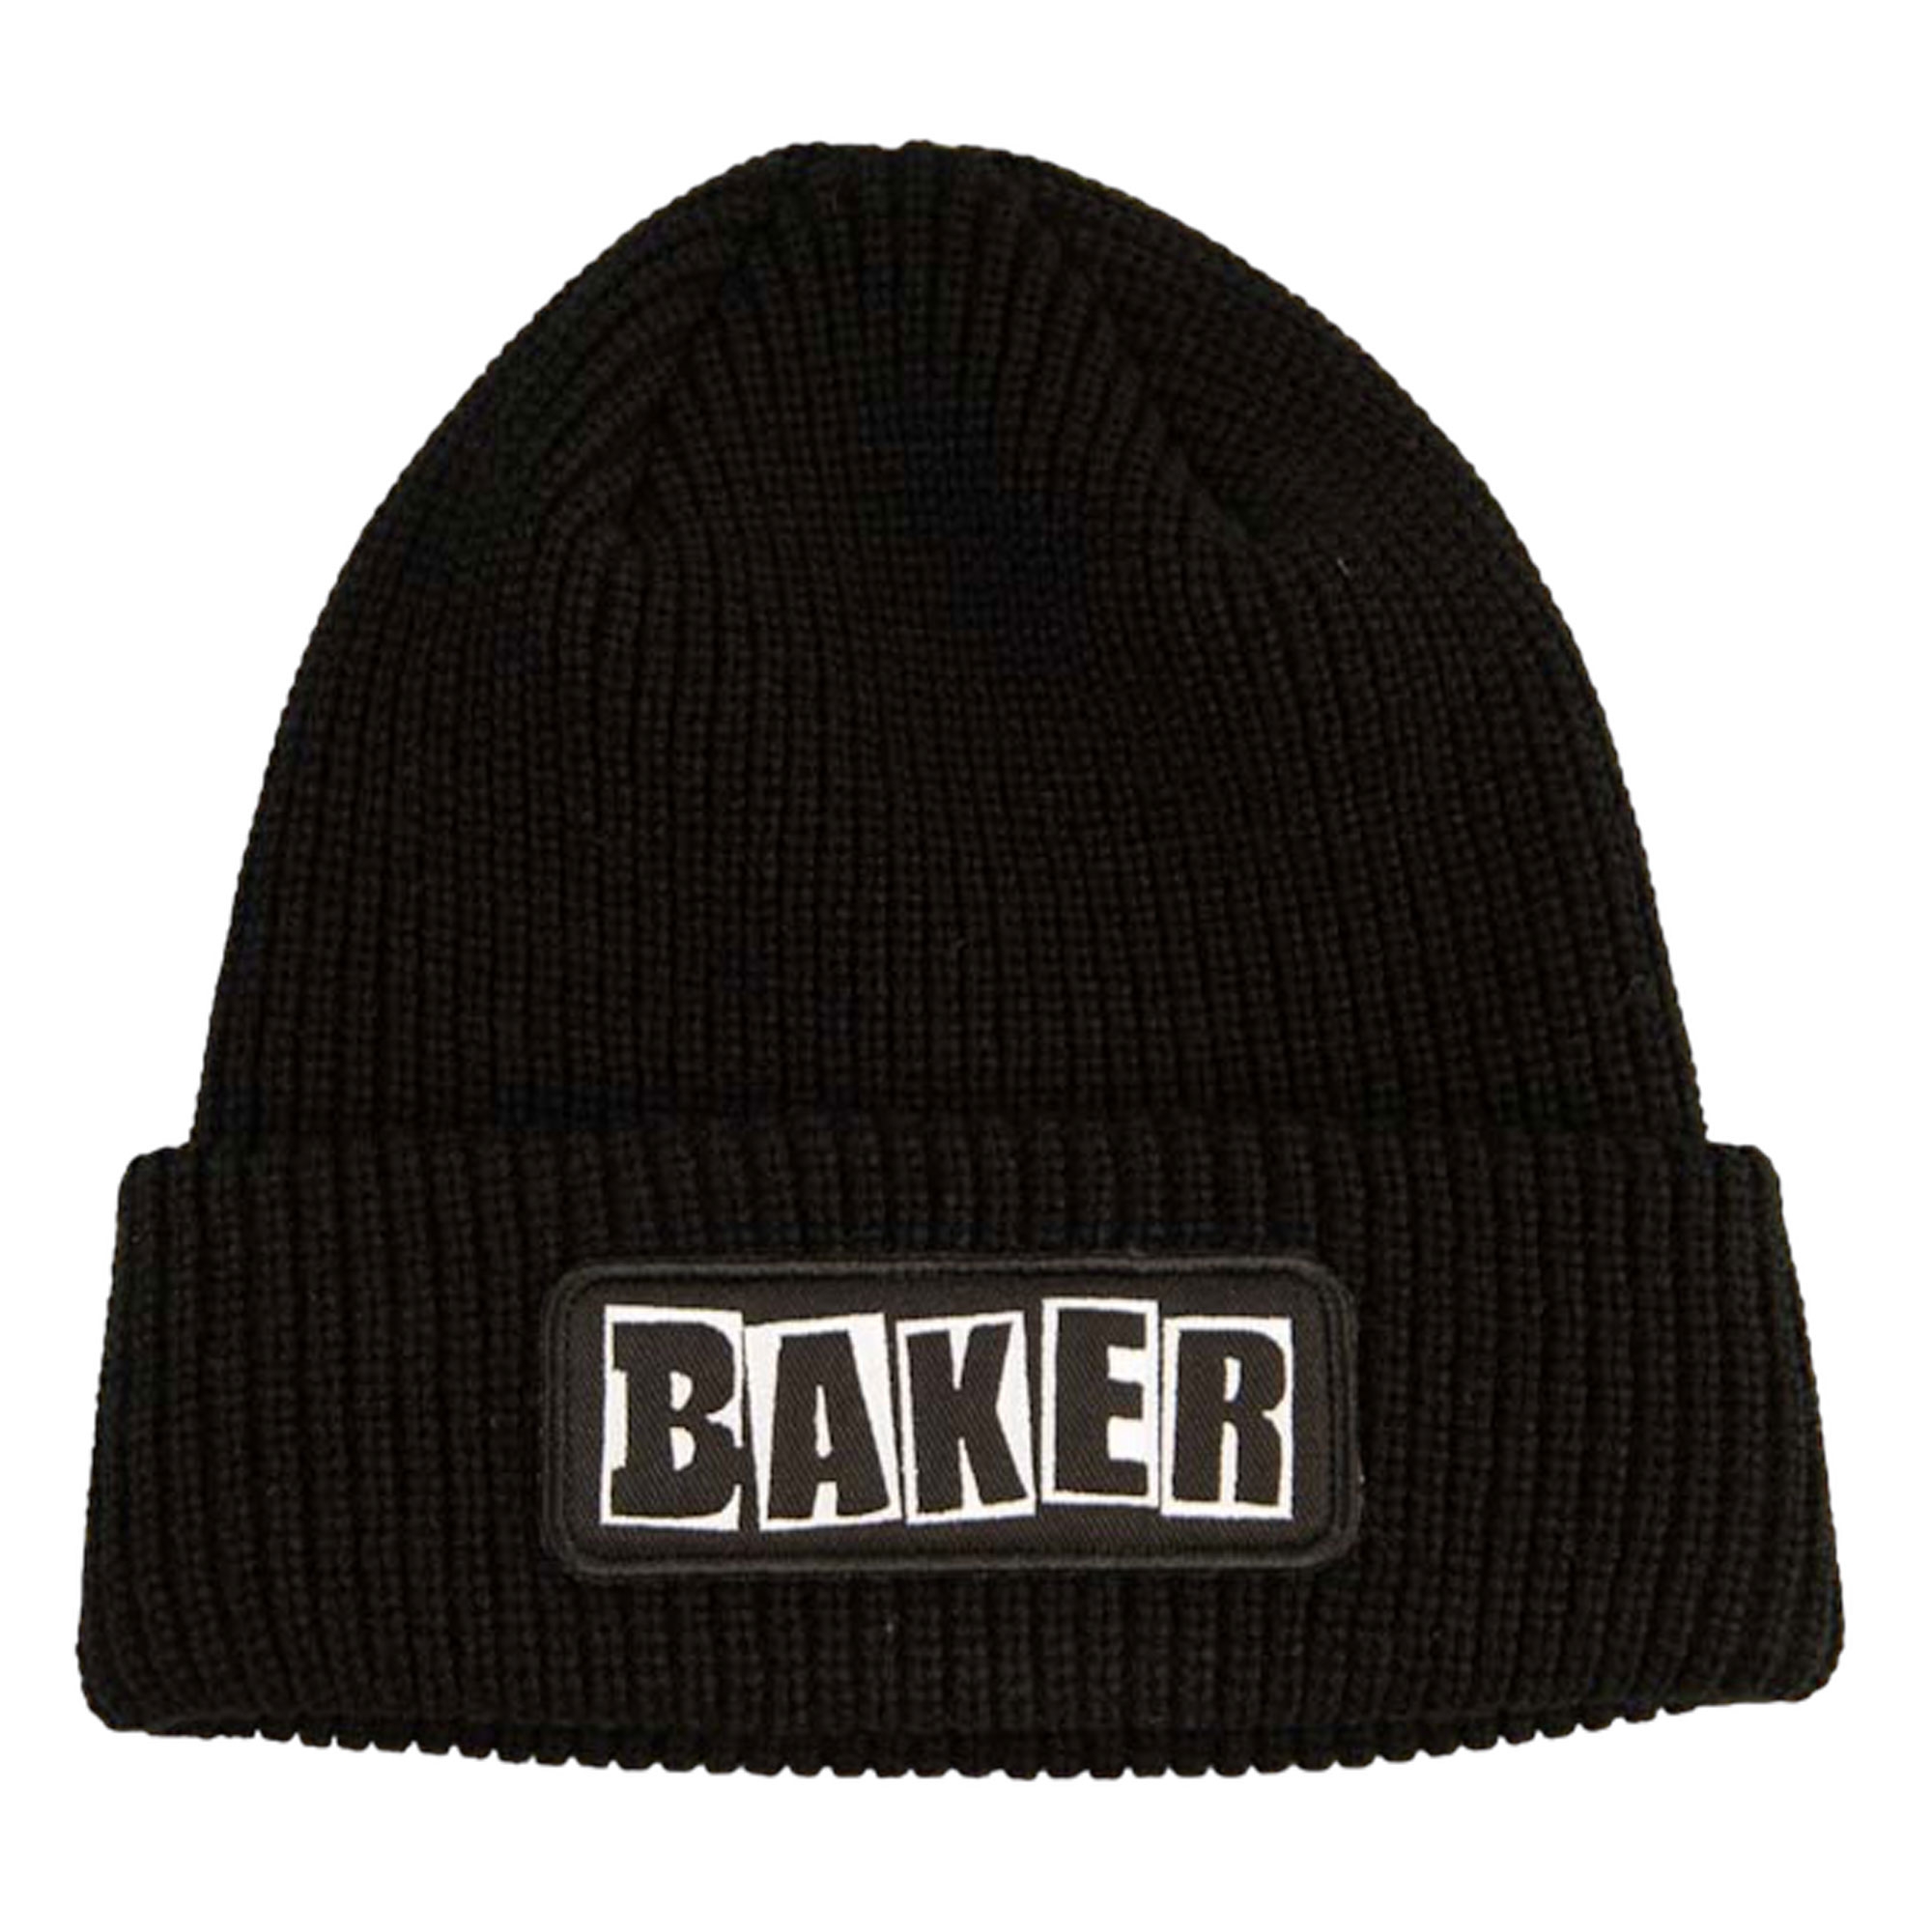 BAKER Beanie BRAND LOGO PATCH, black